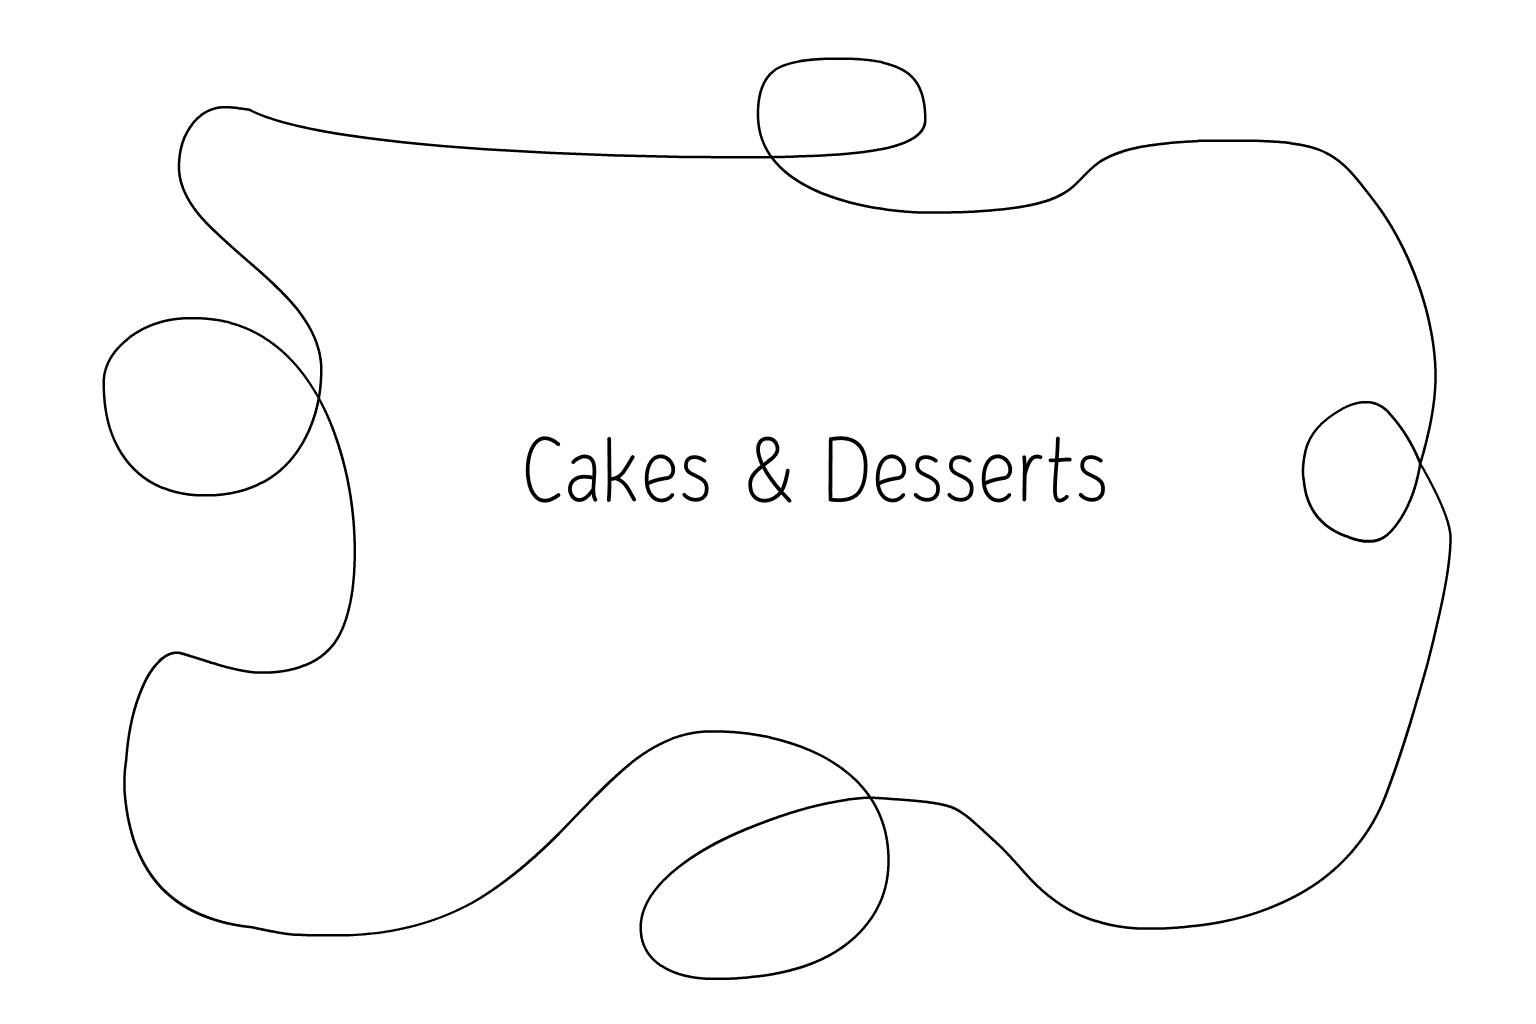 Illustration of wedding desserts